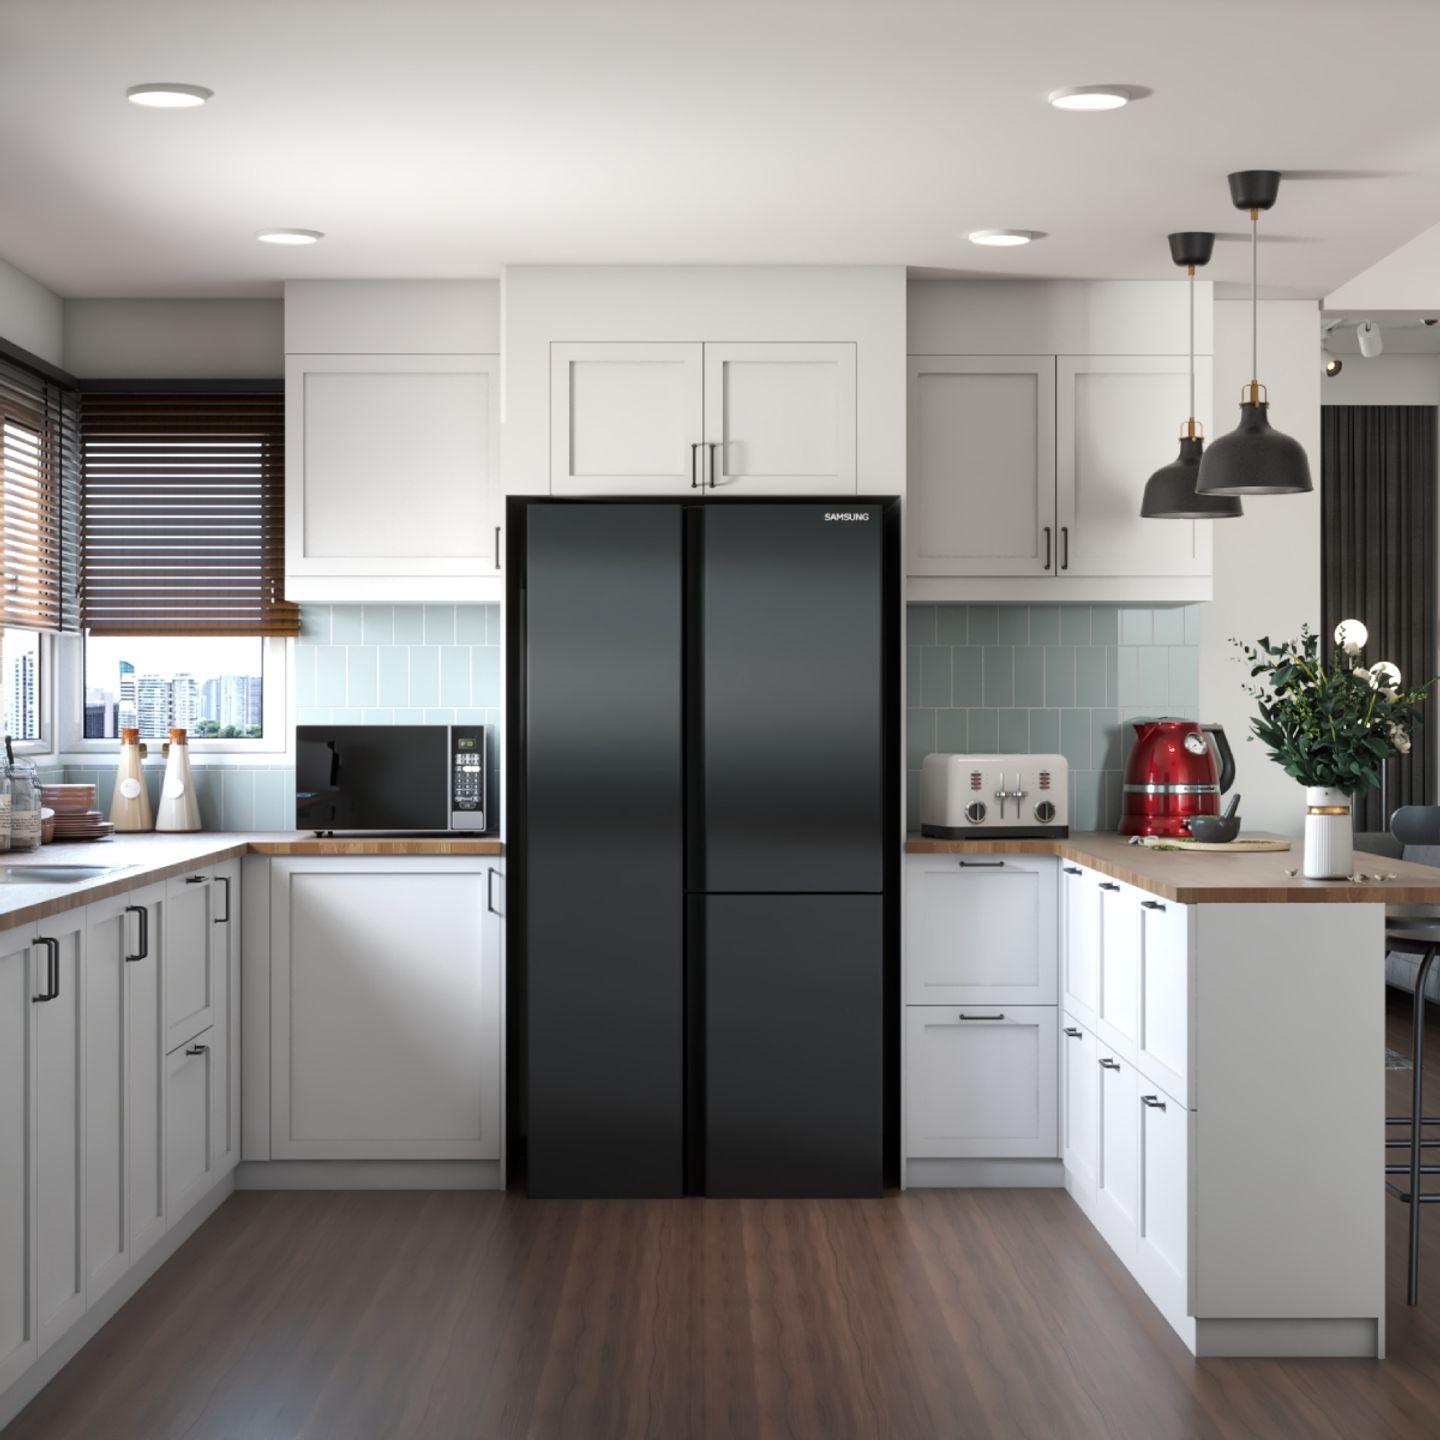 U-Shaped White Kitchen Design With Dark Wood Flooring And Black Refrigerator - Livspace